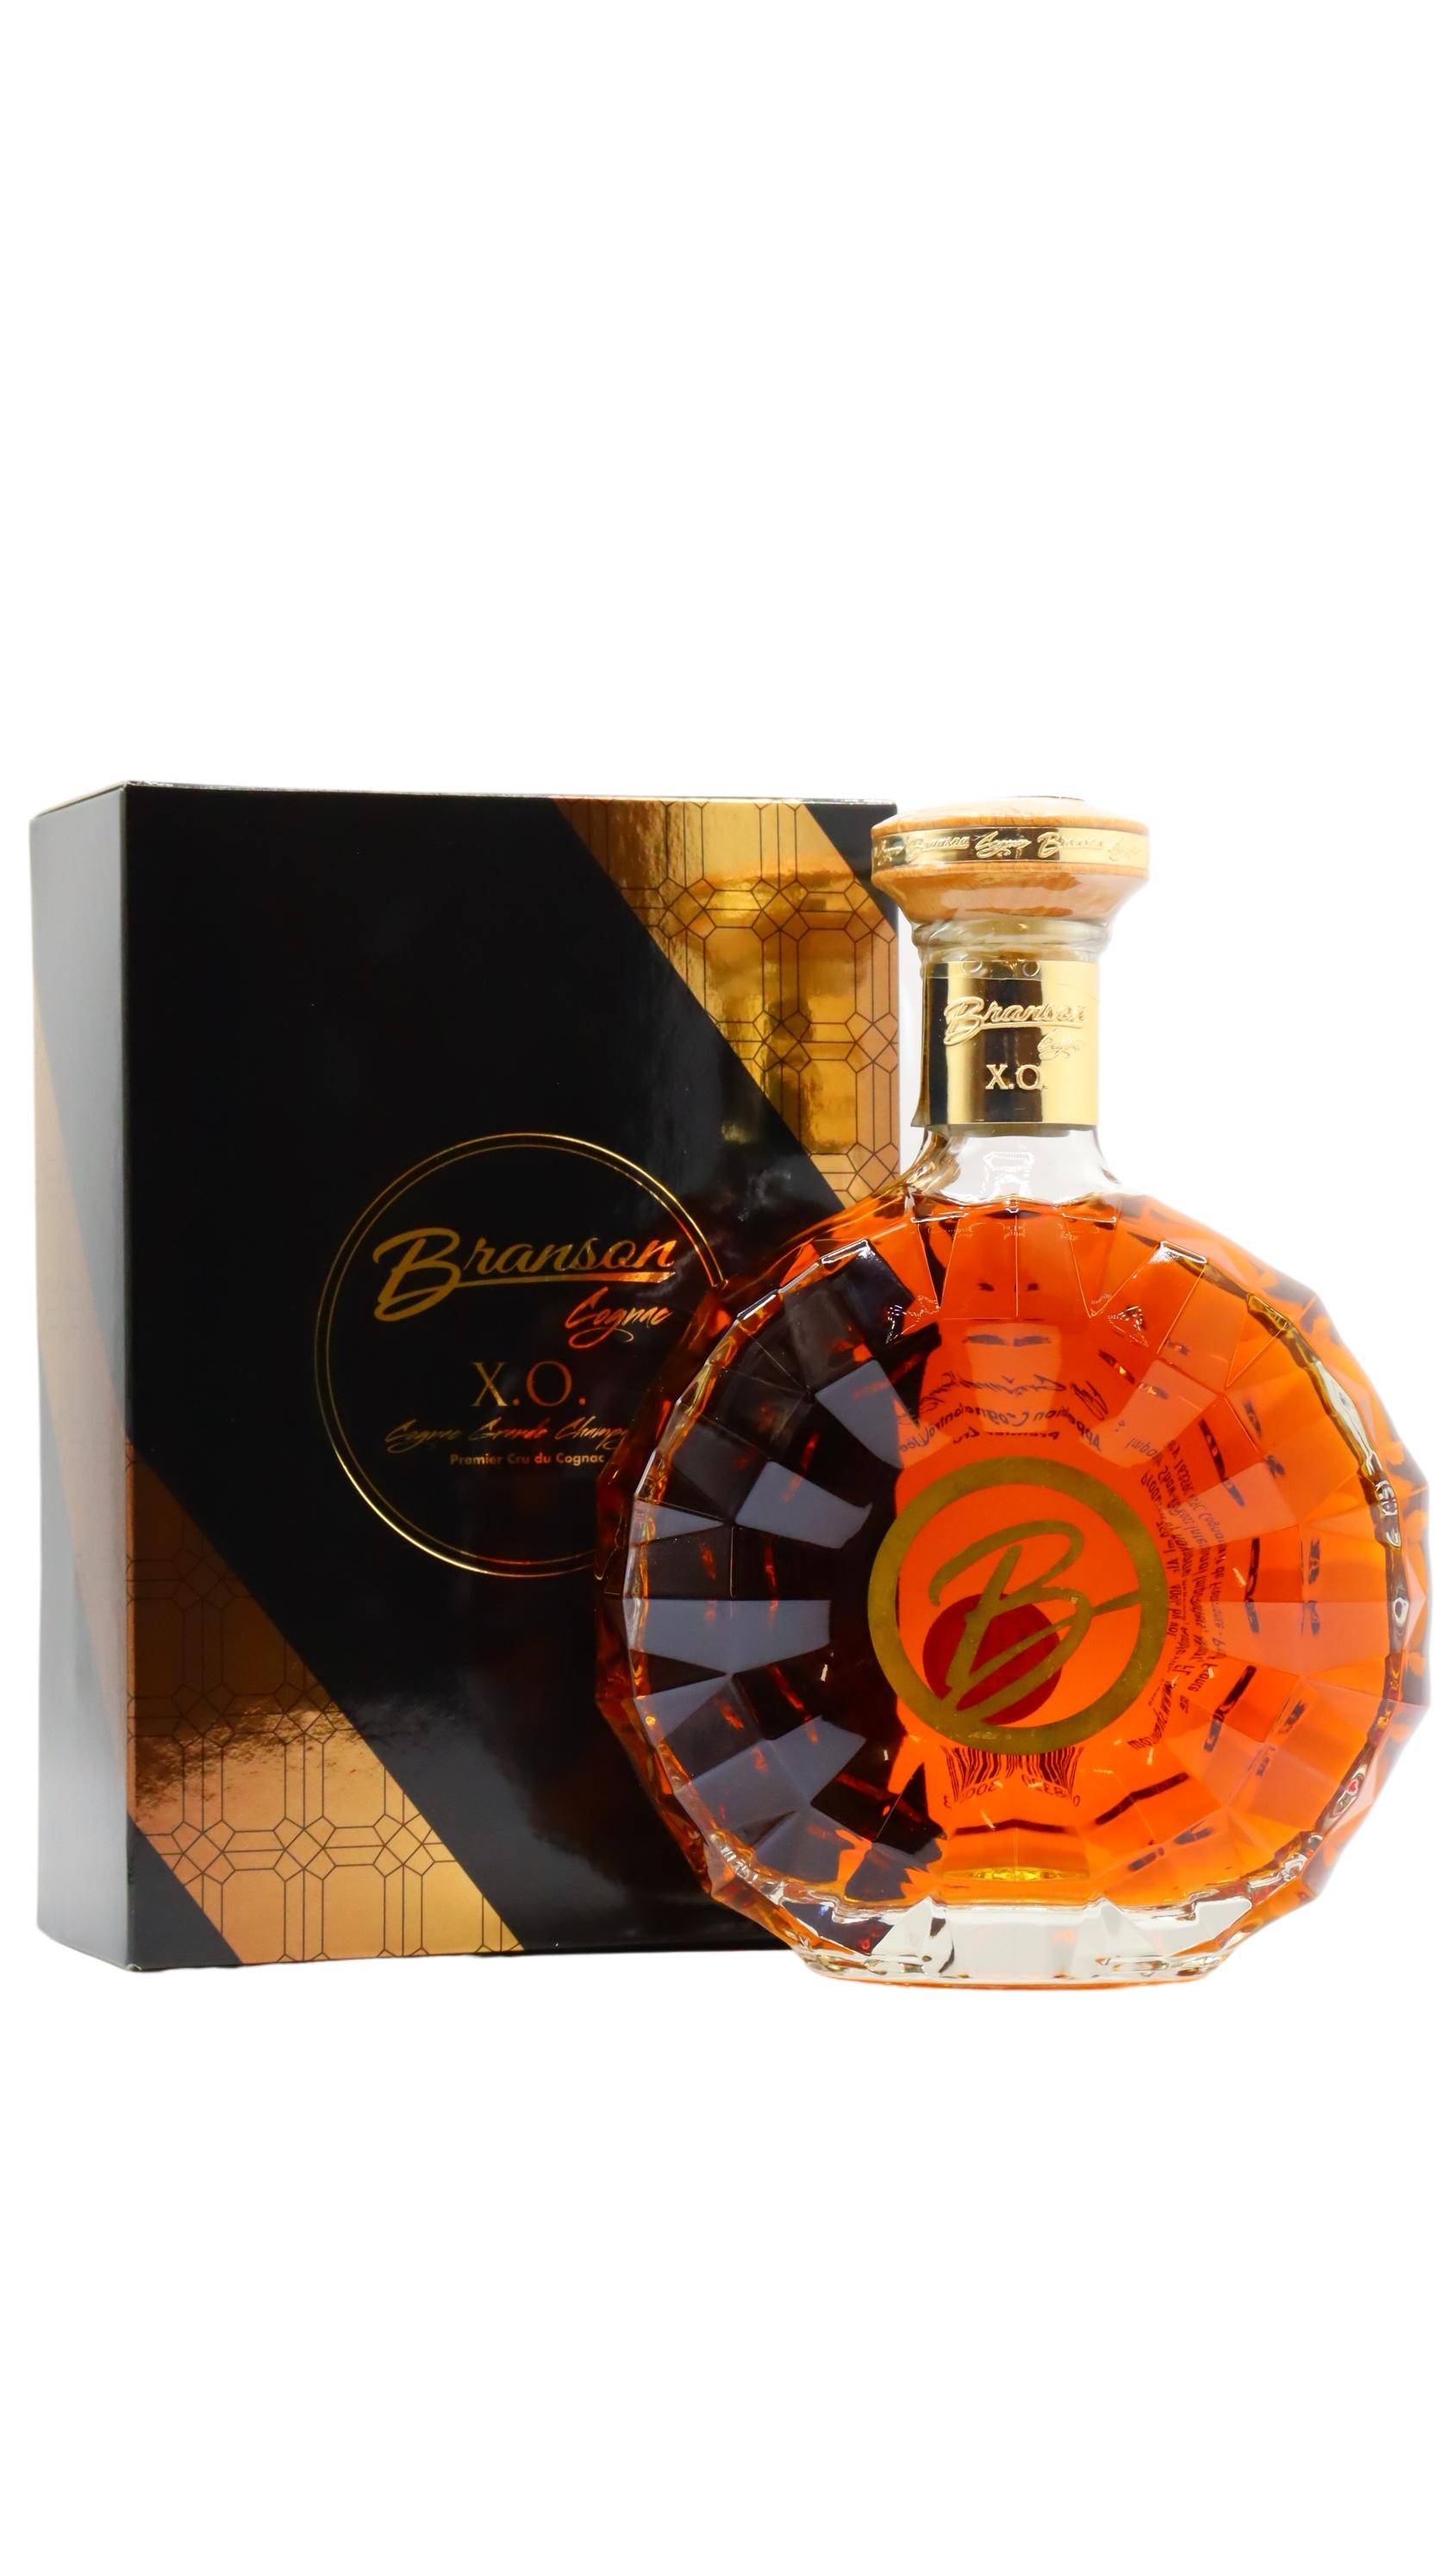 Branson - XO 50 Cent Cognac | Liquor Store Online